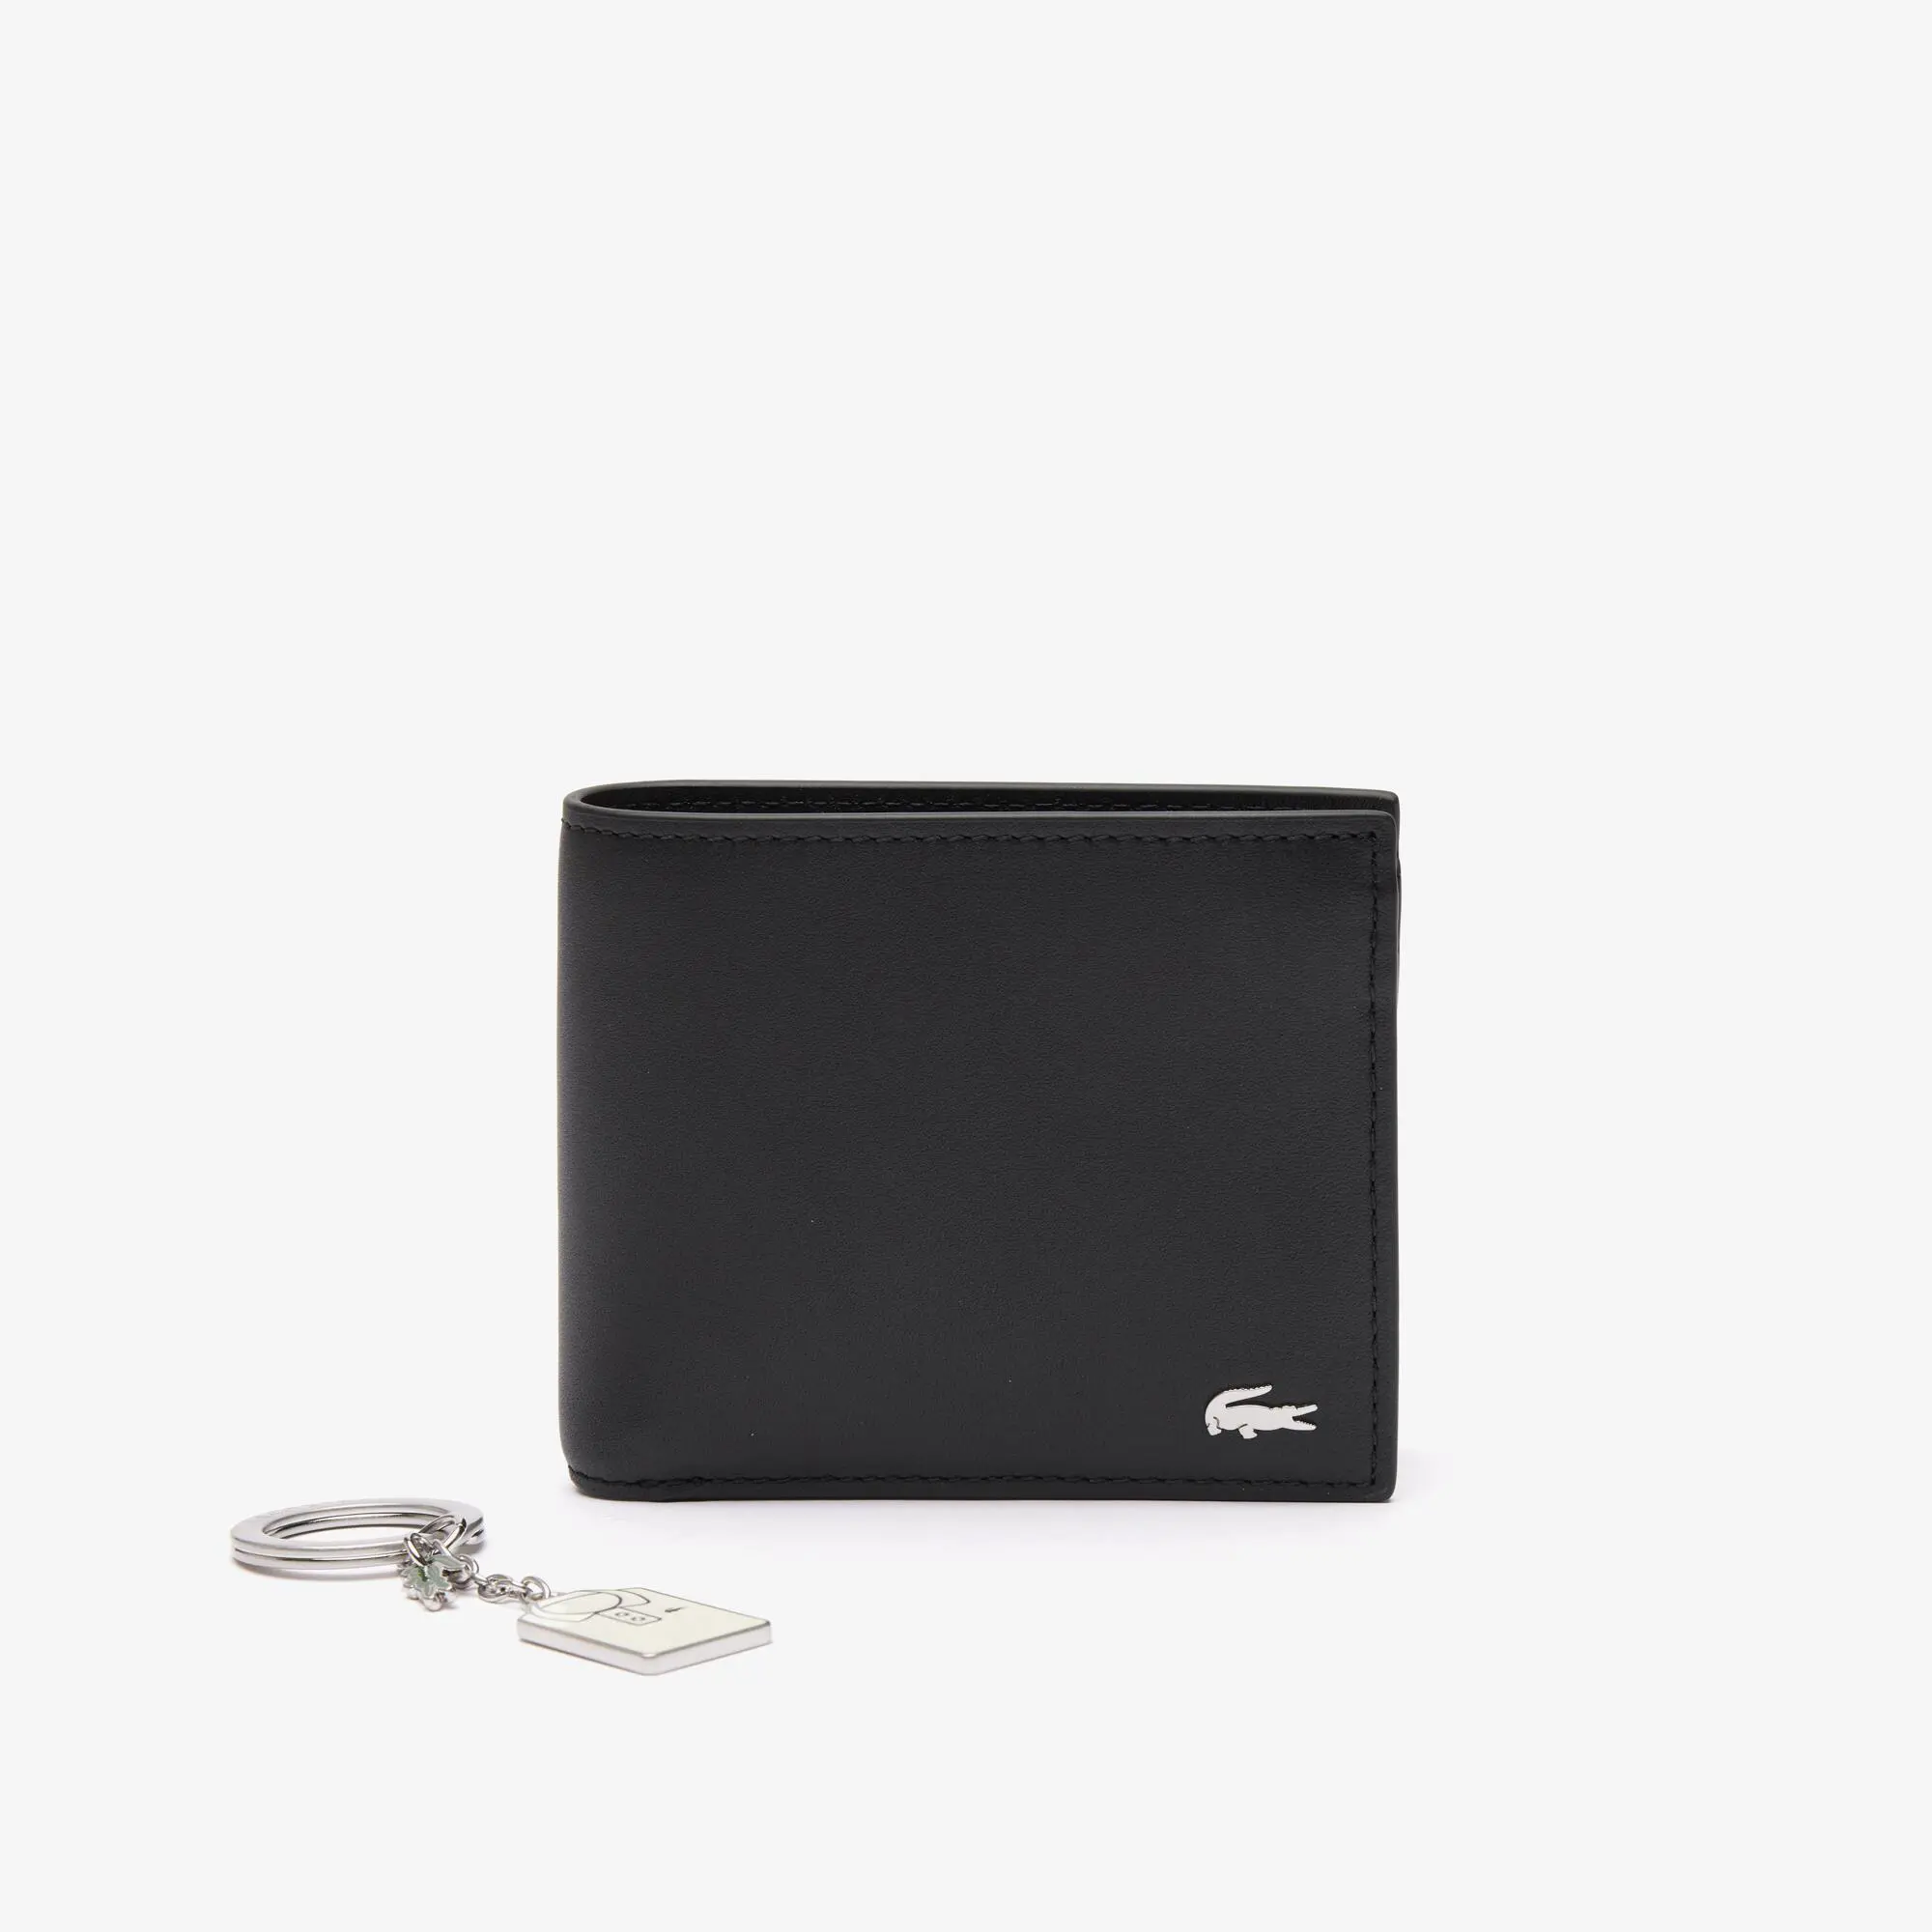 Lacoste Men's Wallet & Polo Key Chain Gift Set. 1